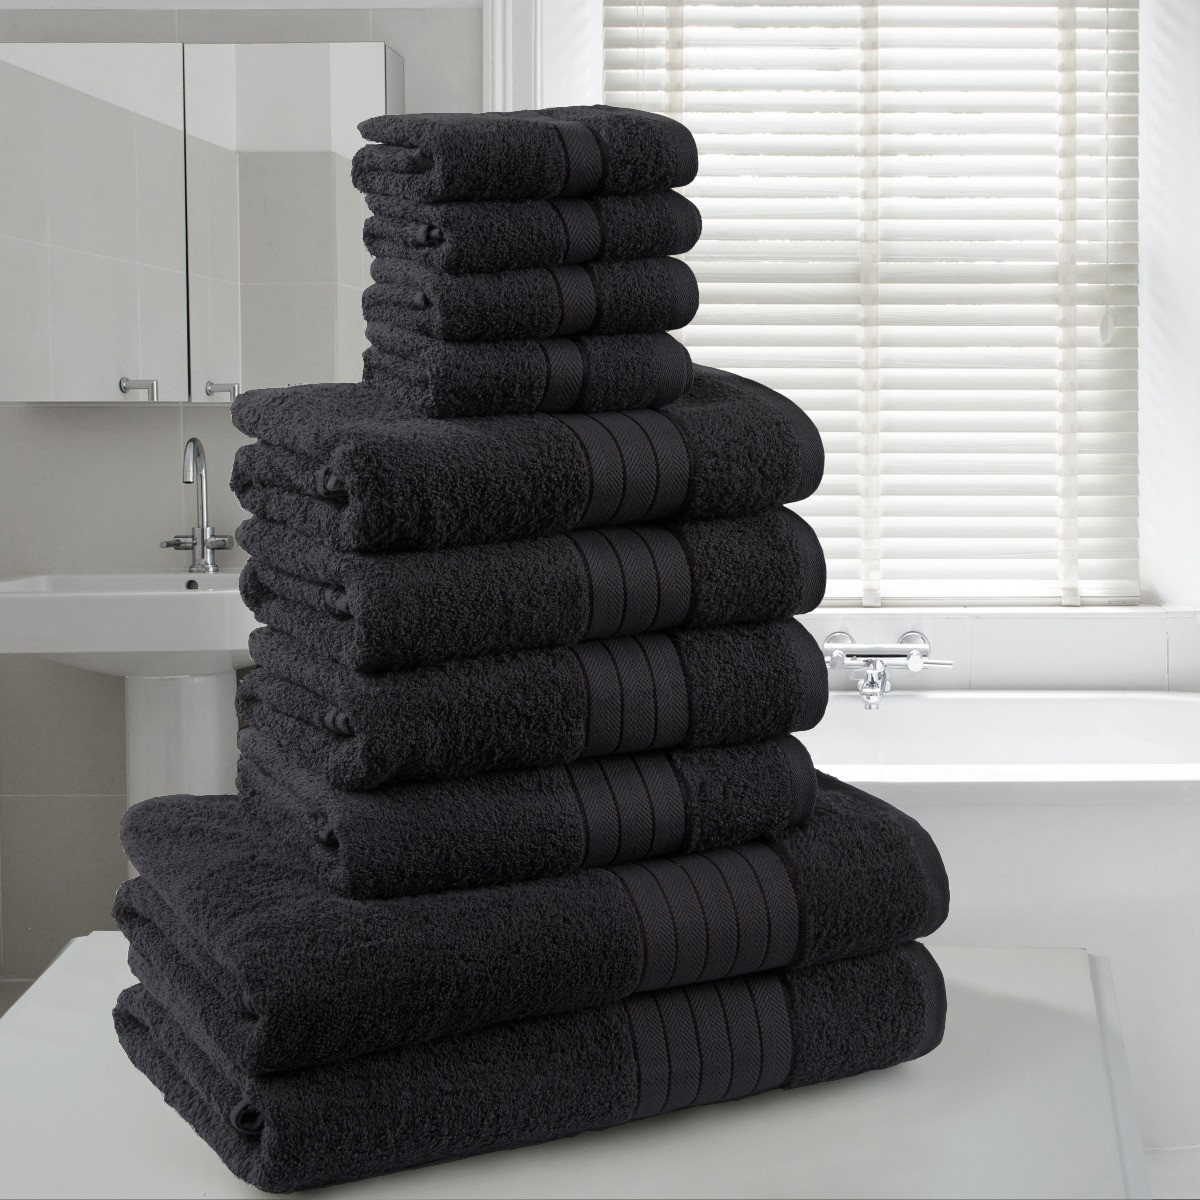 Brentfords Towel Bale 10 Piece - Black>